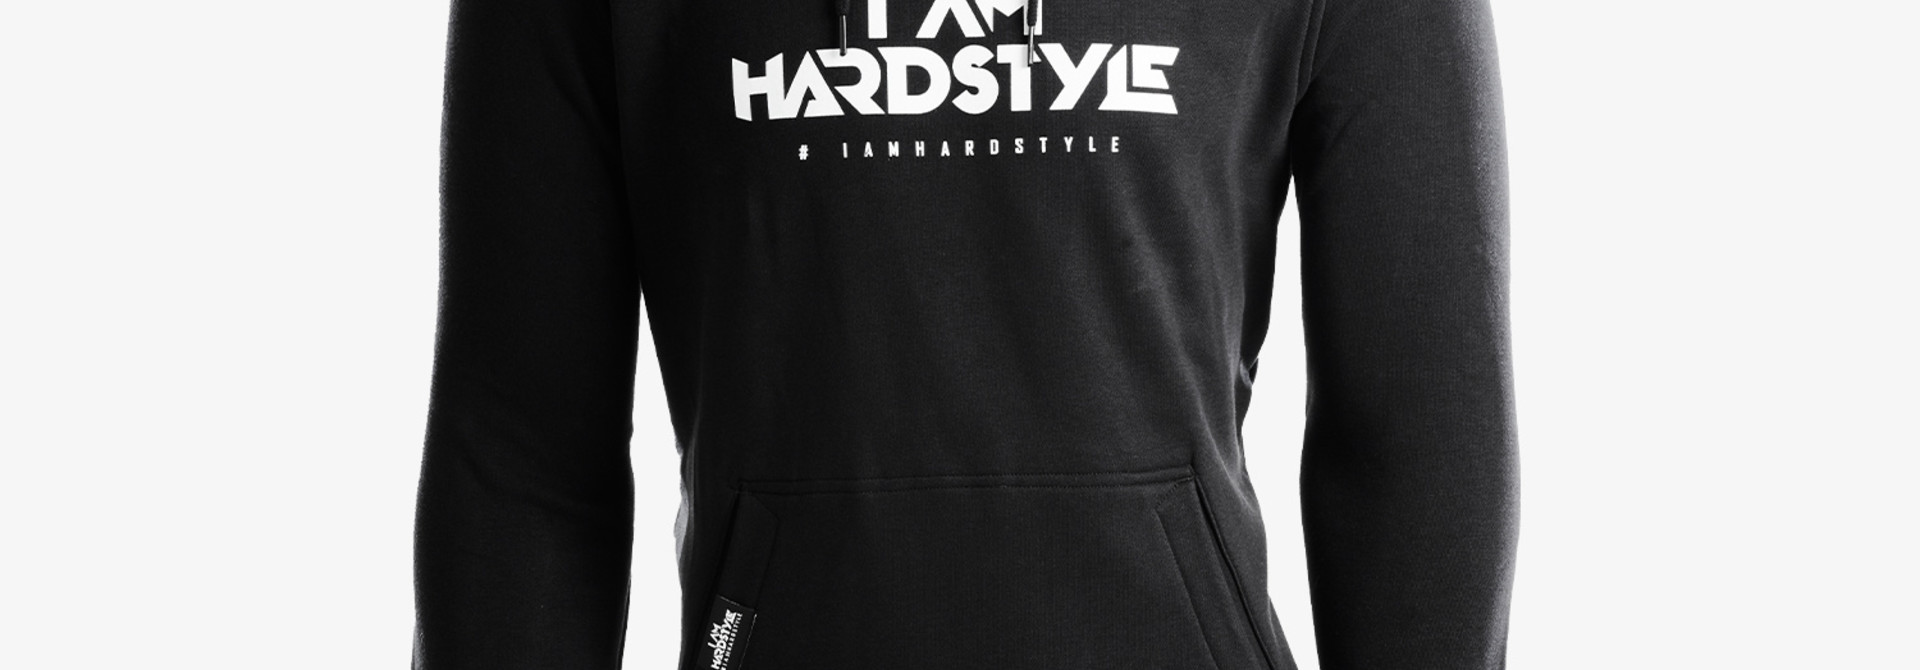 Hoodie - Black/White - I AM HARDSTYLE Shop